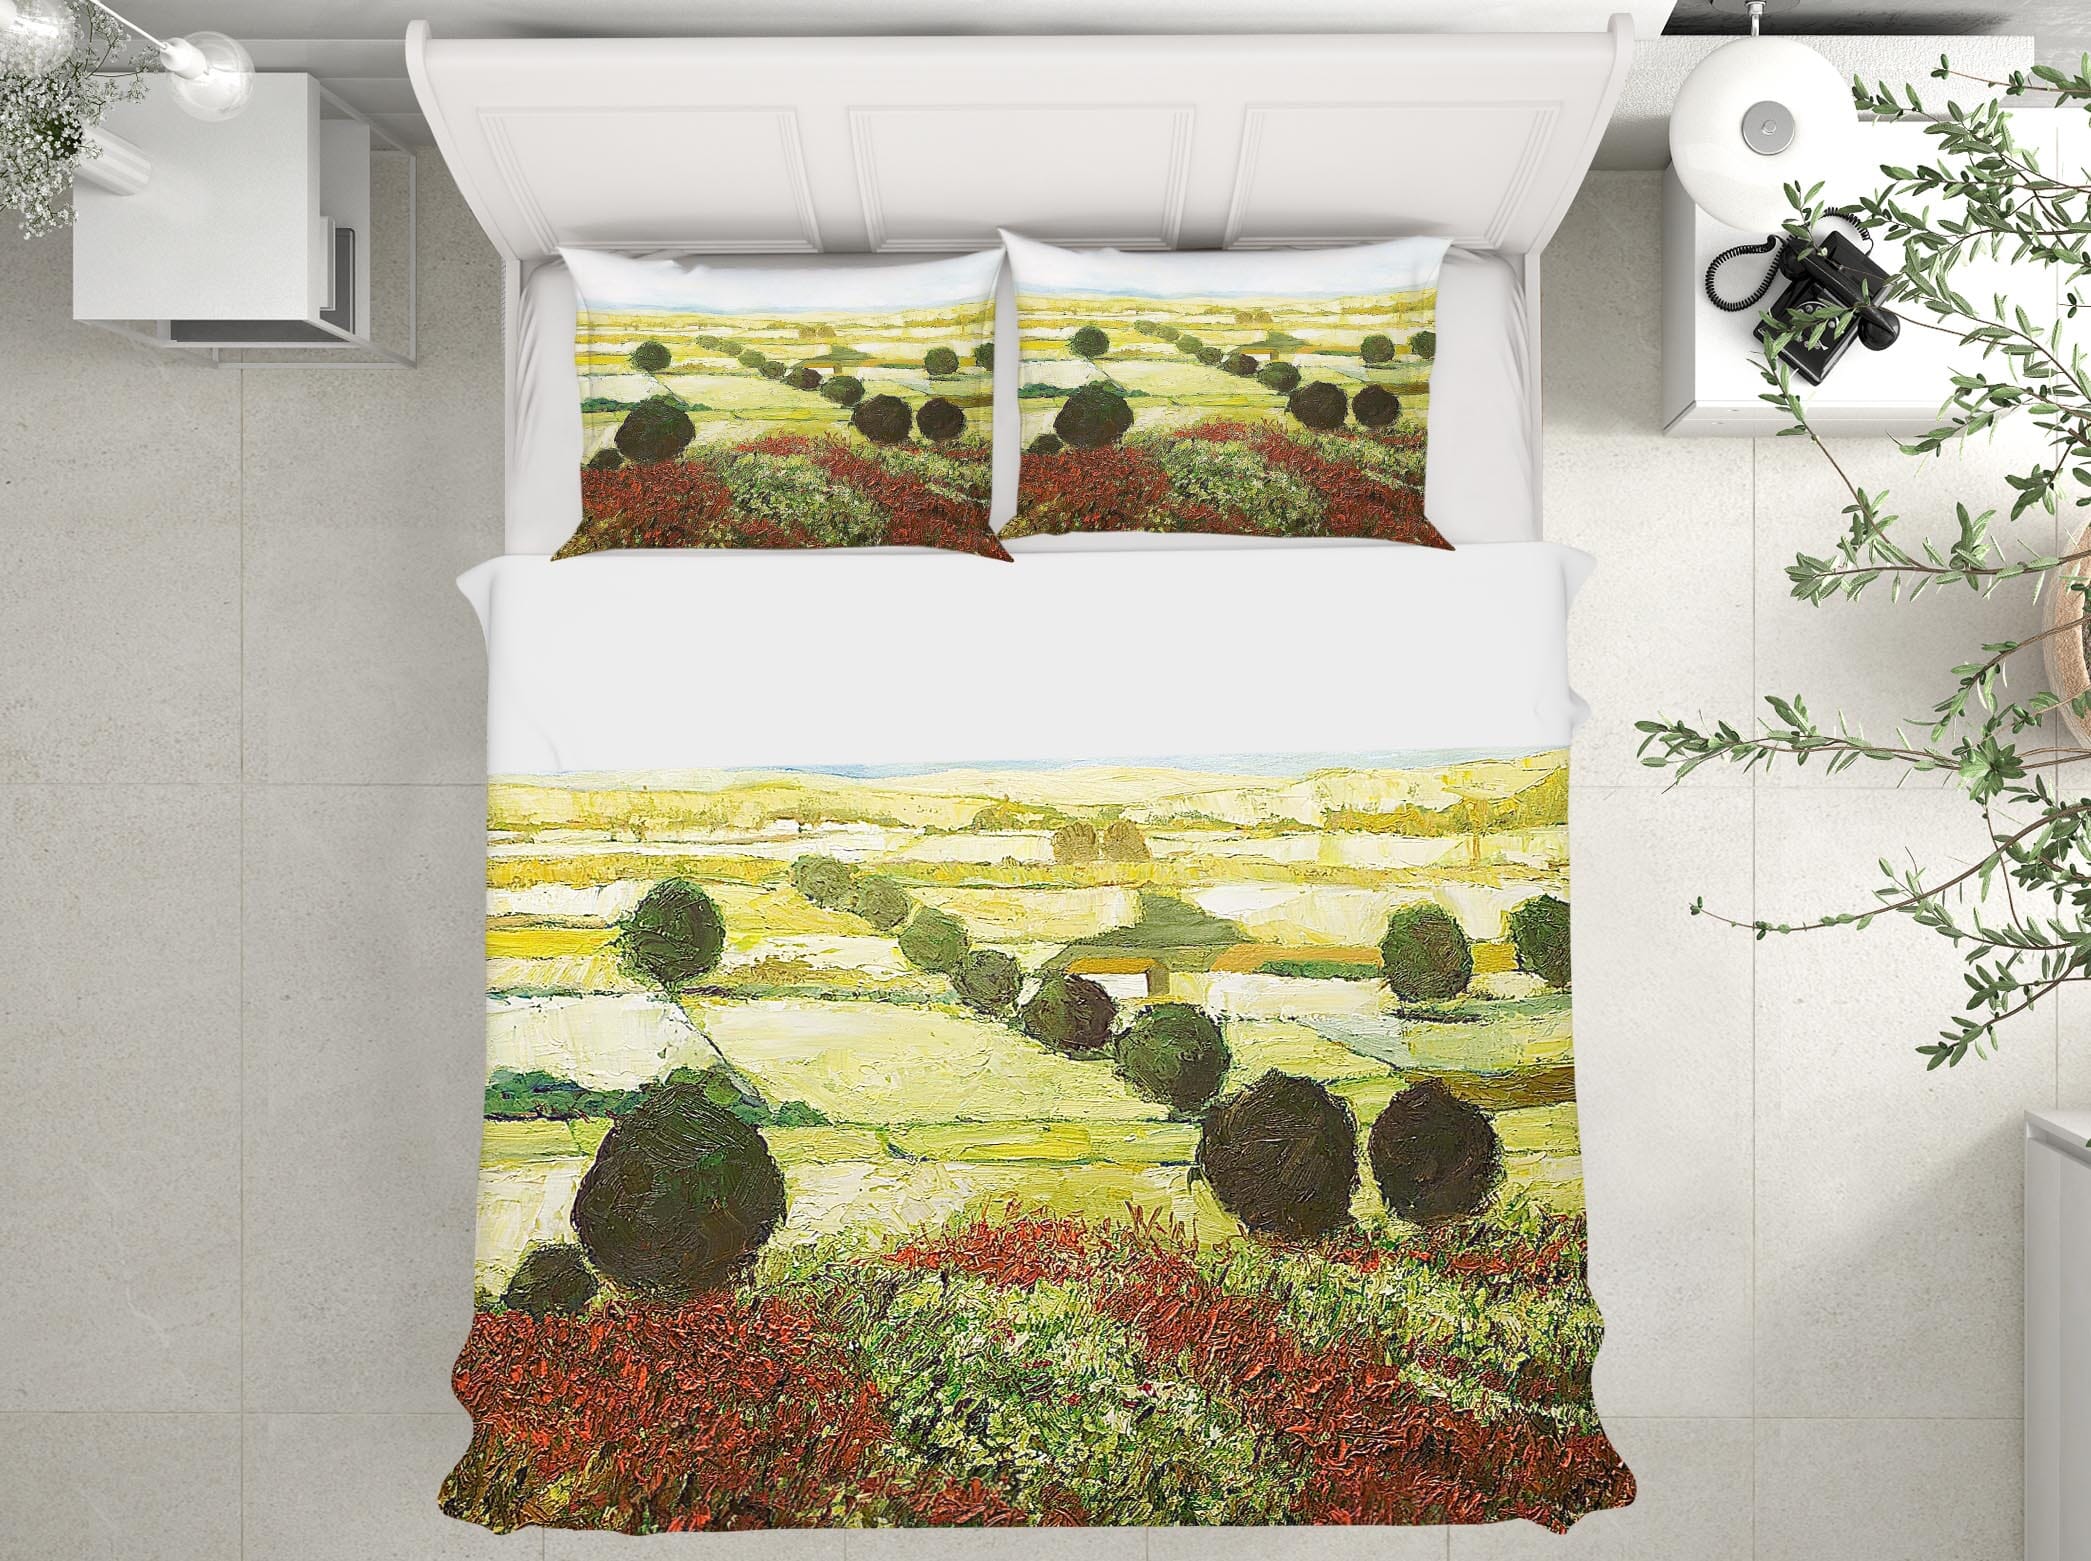 3D Wildflower Valley 2109 Allan P. Friedlander Bedding Bed Pillowcases Quilt Quiet Covers AJ Creativity Home 